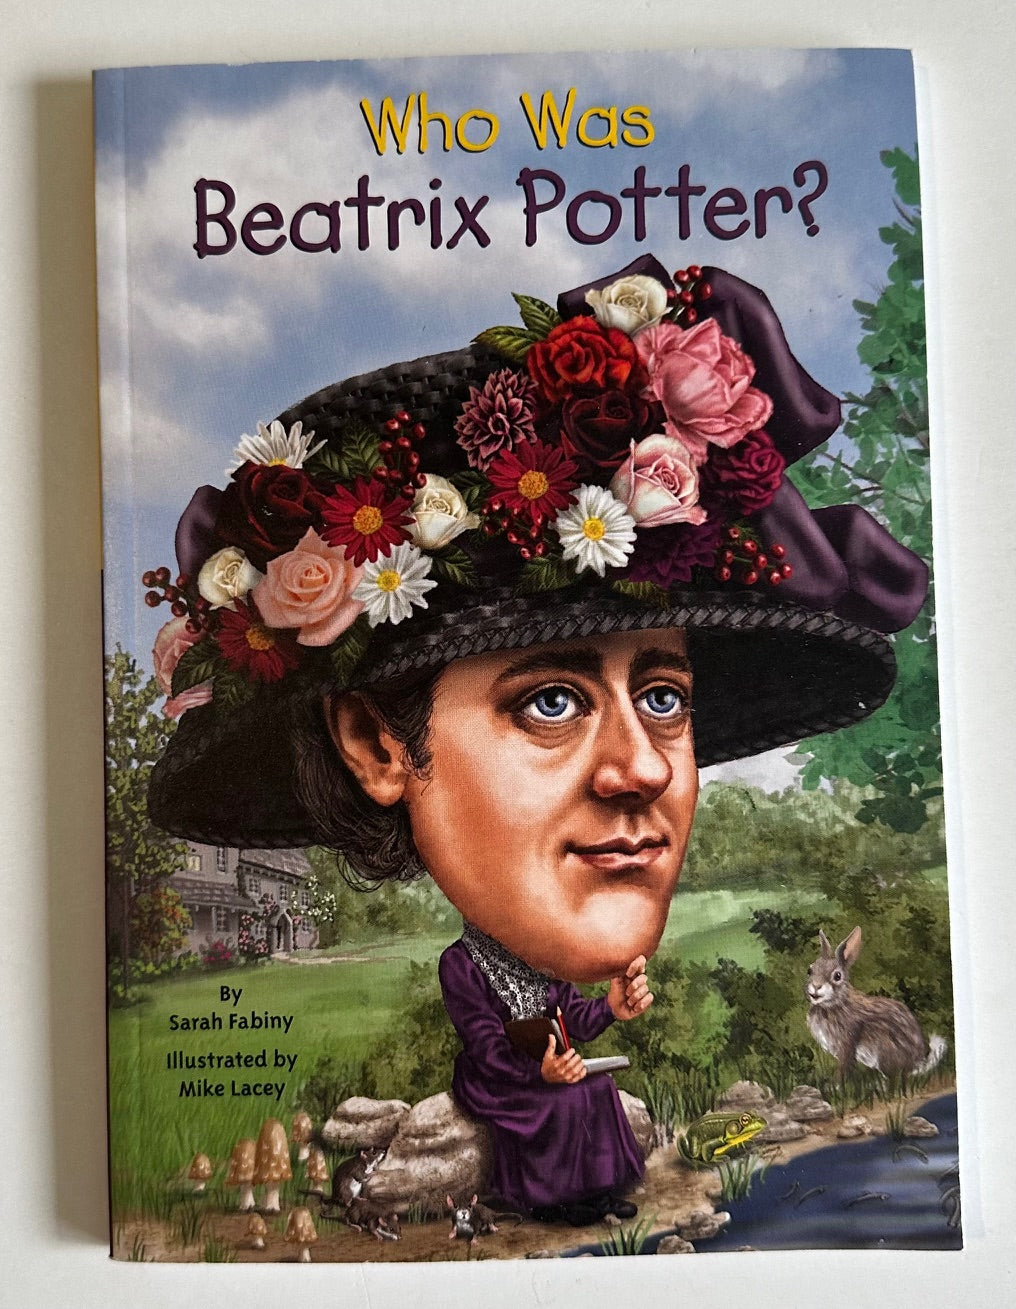 "Who Was Beatrix Potter?"